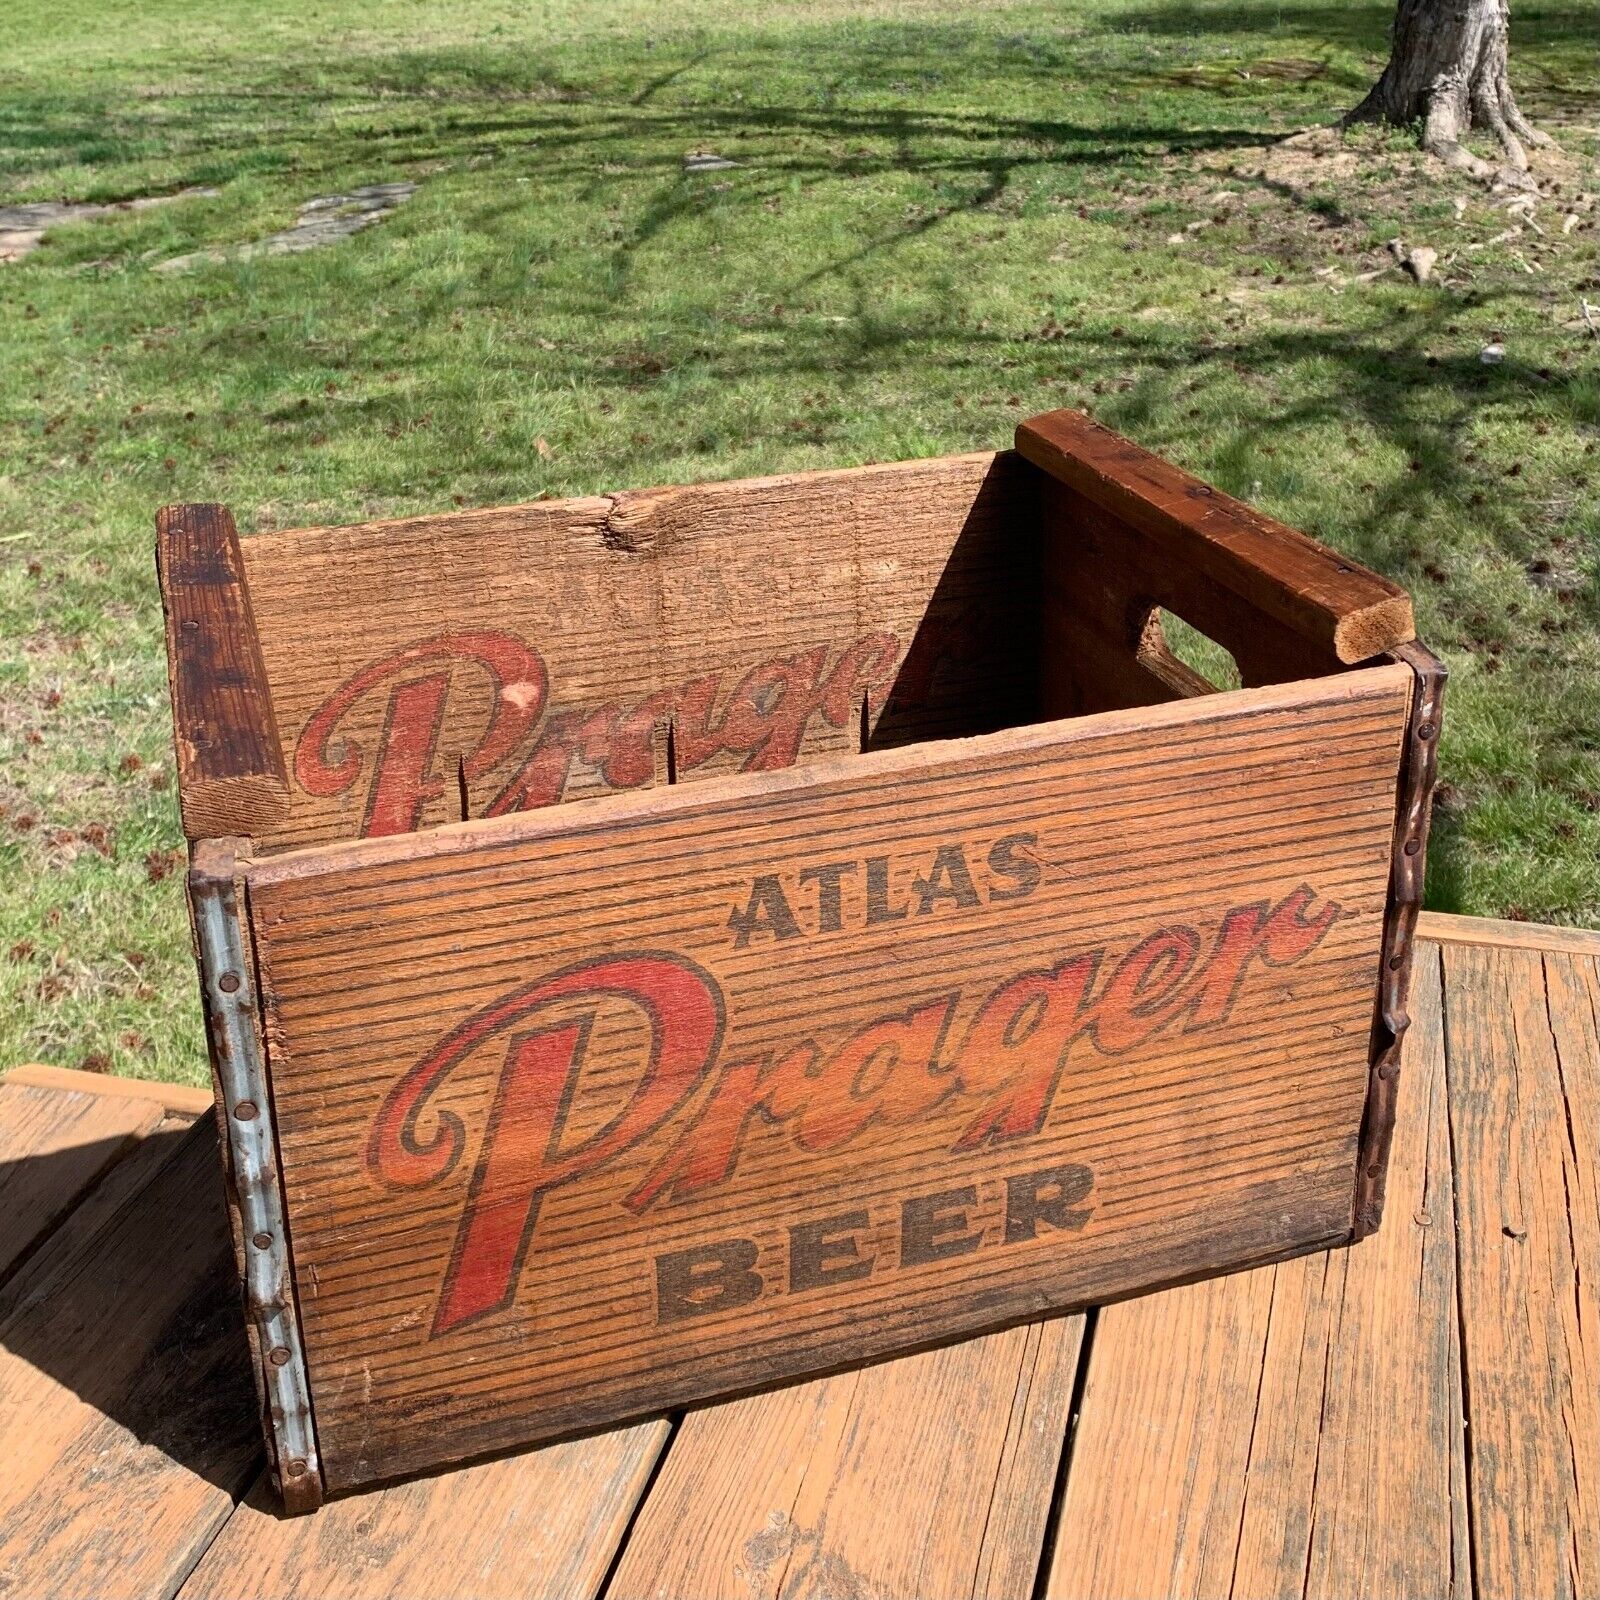 Atlas Chicago Prager Beer Primitive Wooded Beer Crate RARE 32 Ounce Bottles